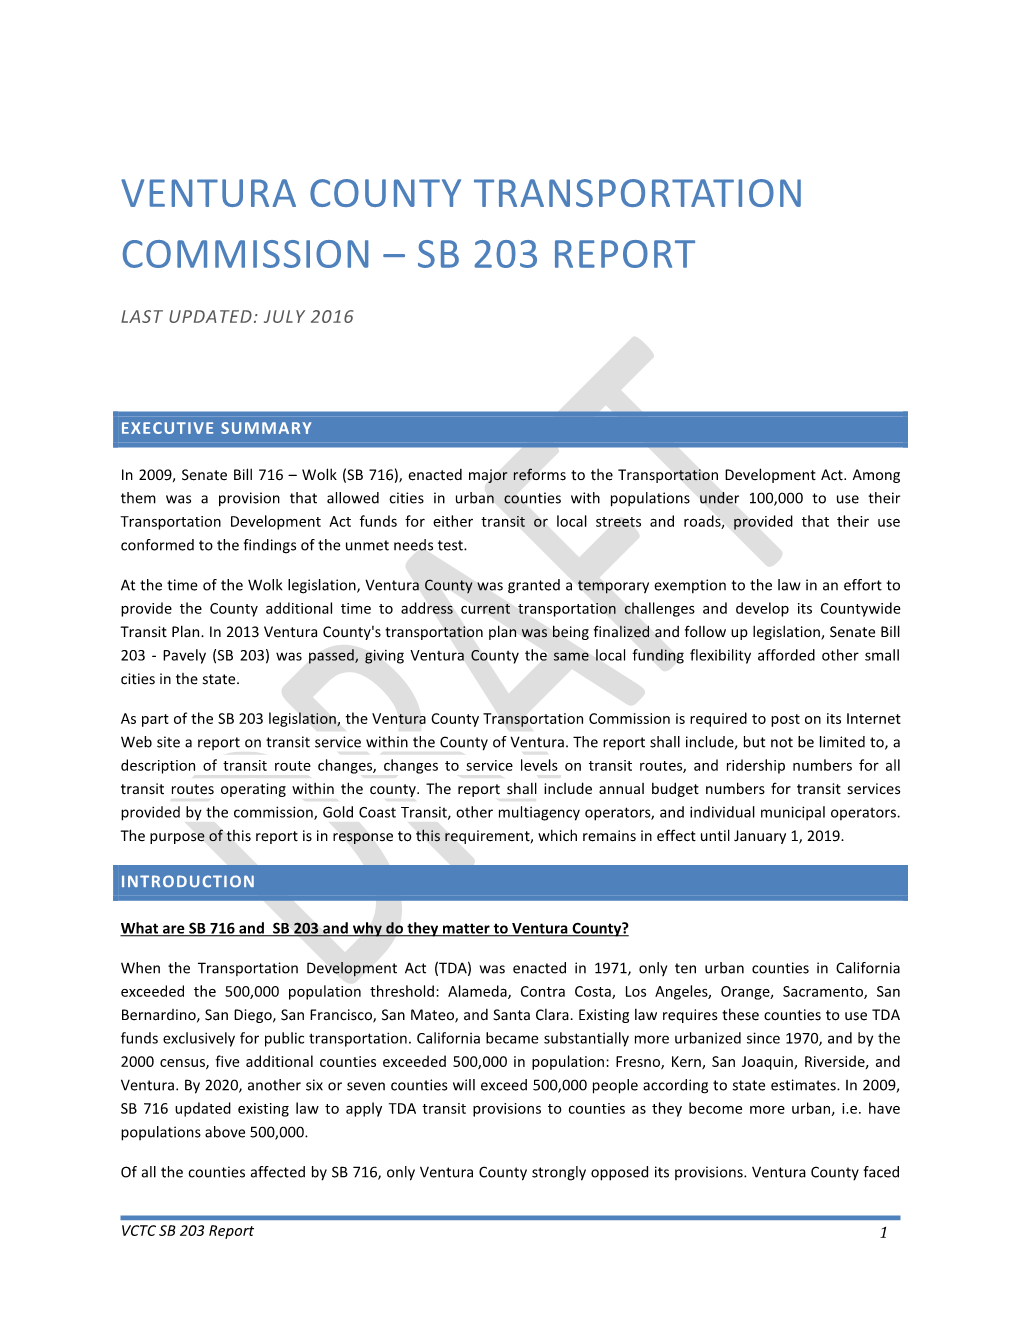 Ventura County Transportation Commission – Sb 203 Report